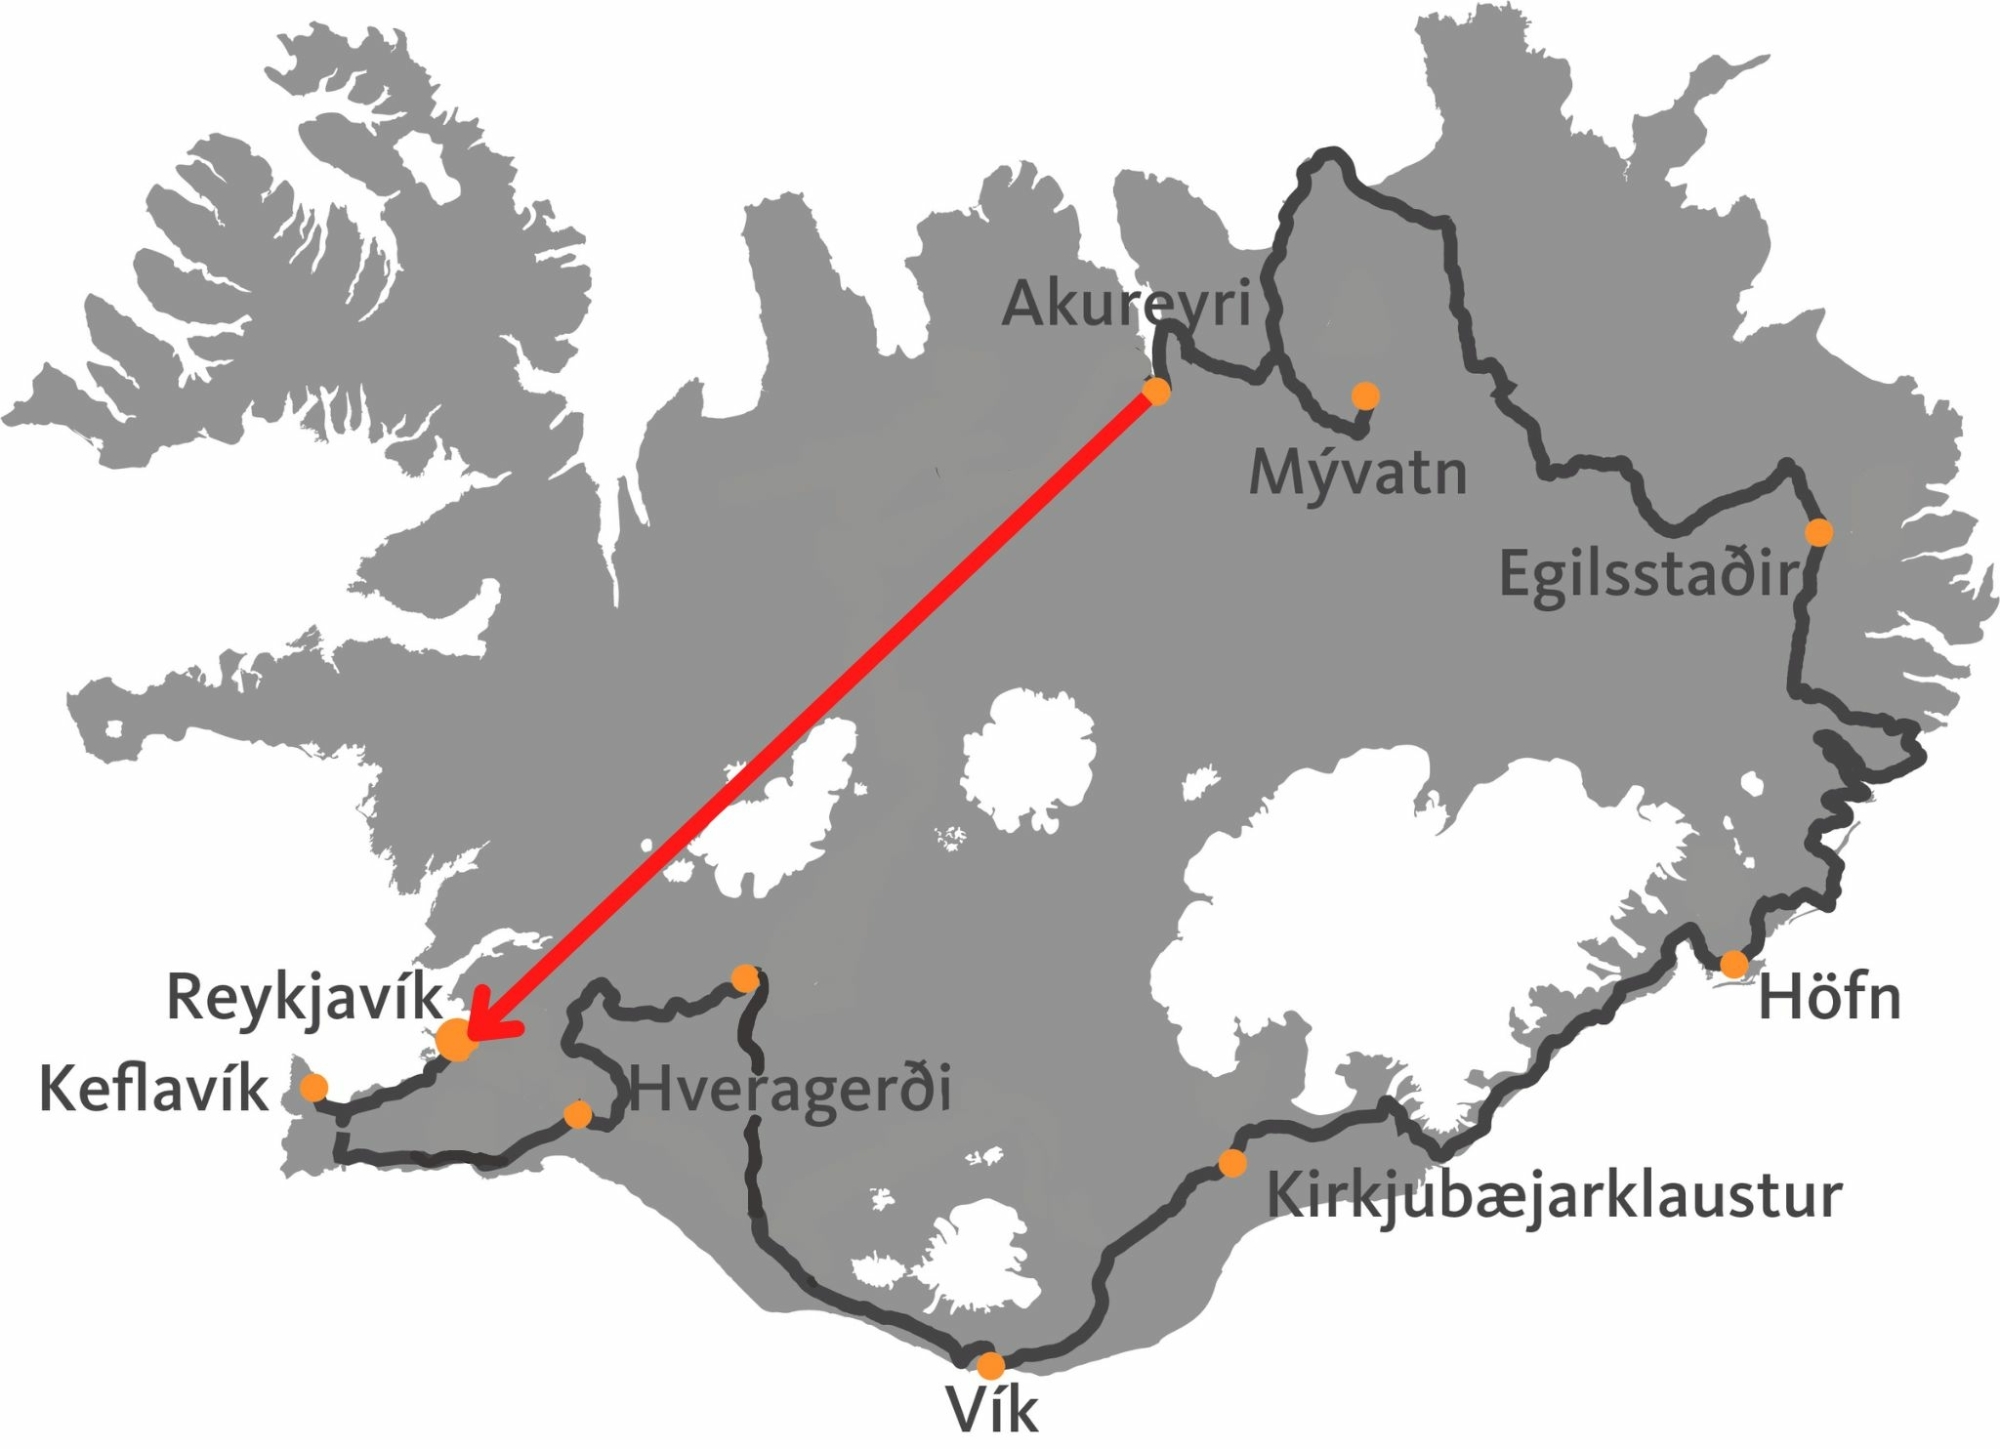 Kaart van iJsland met 10 daagse rondreis